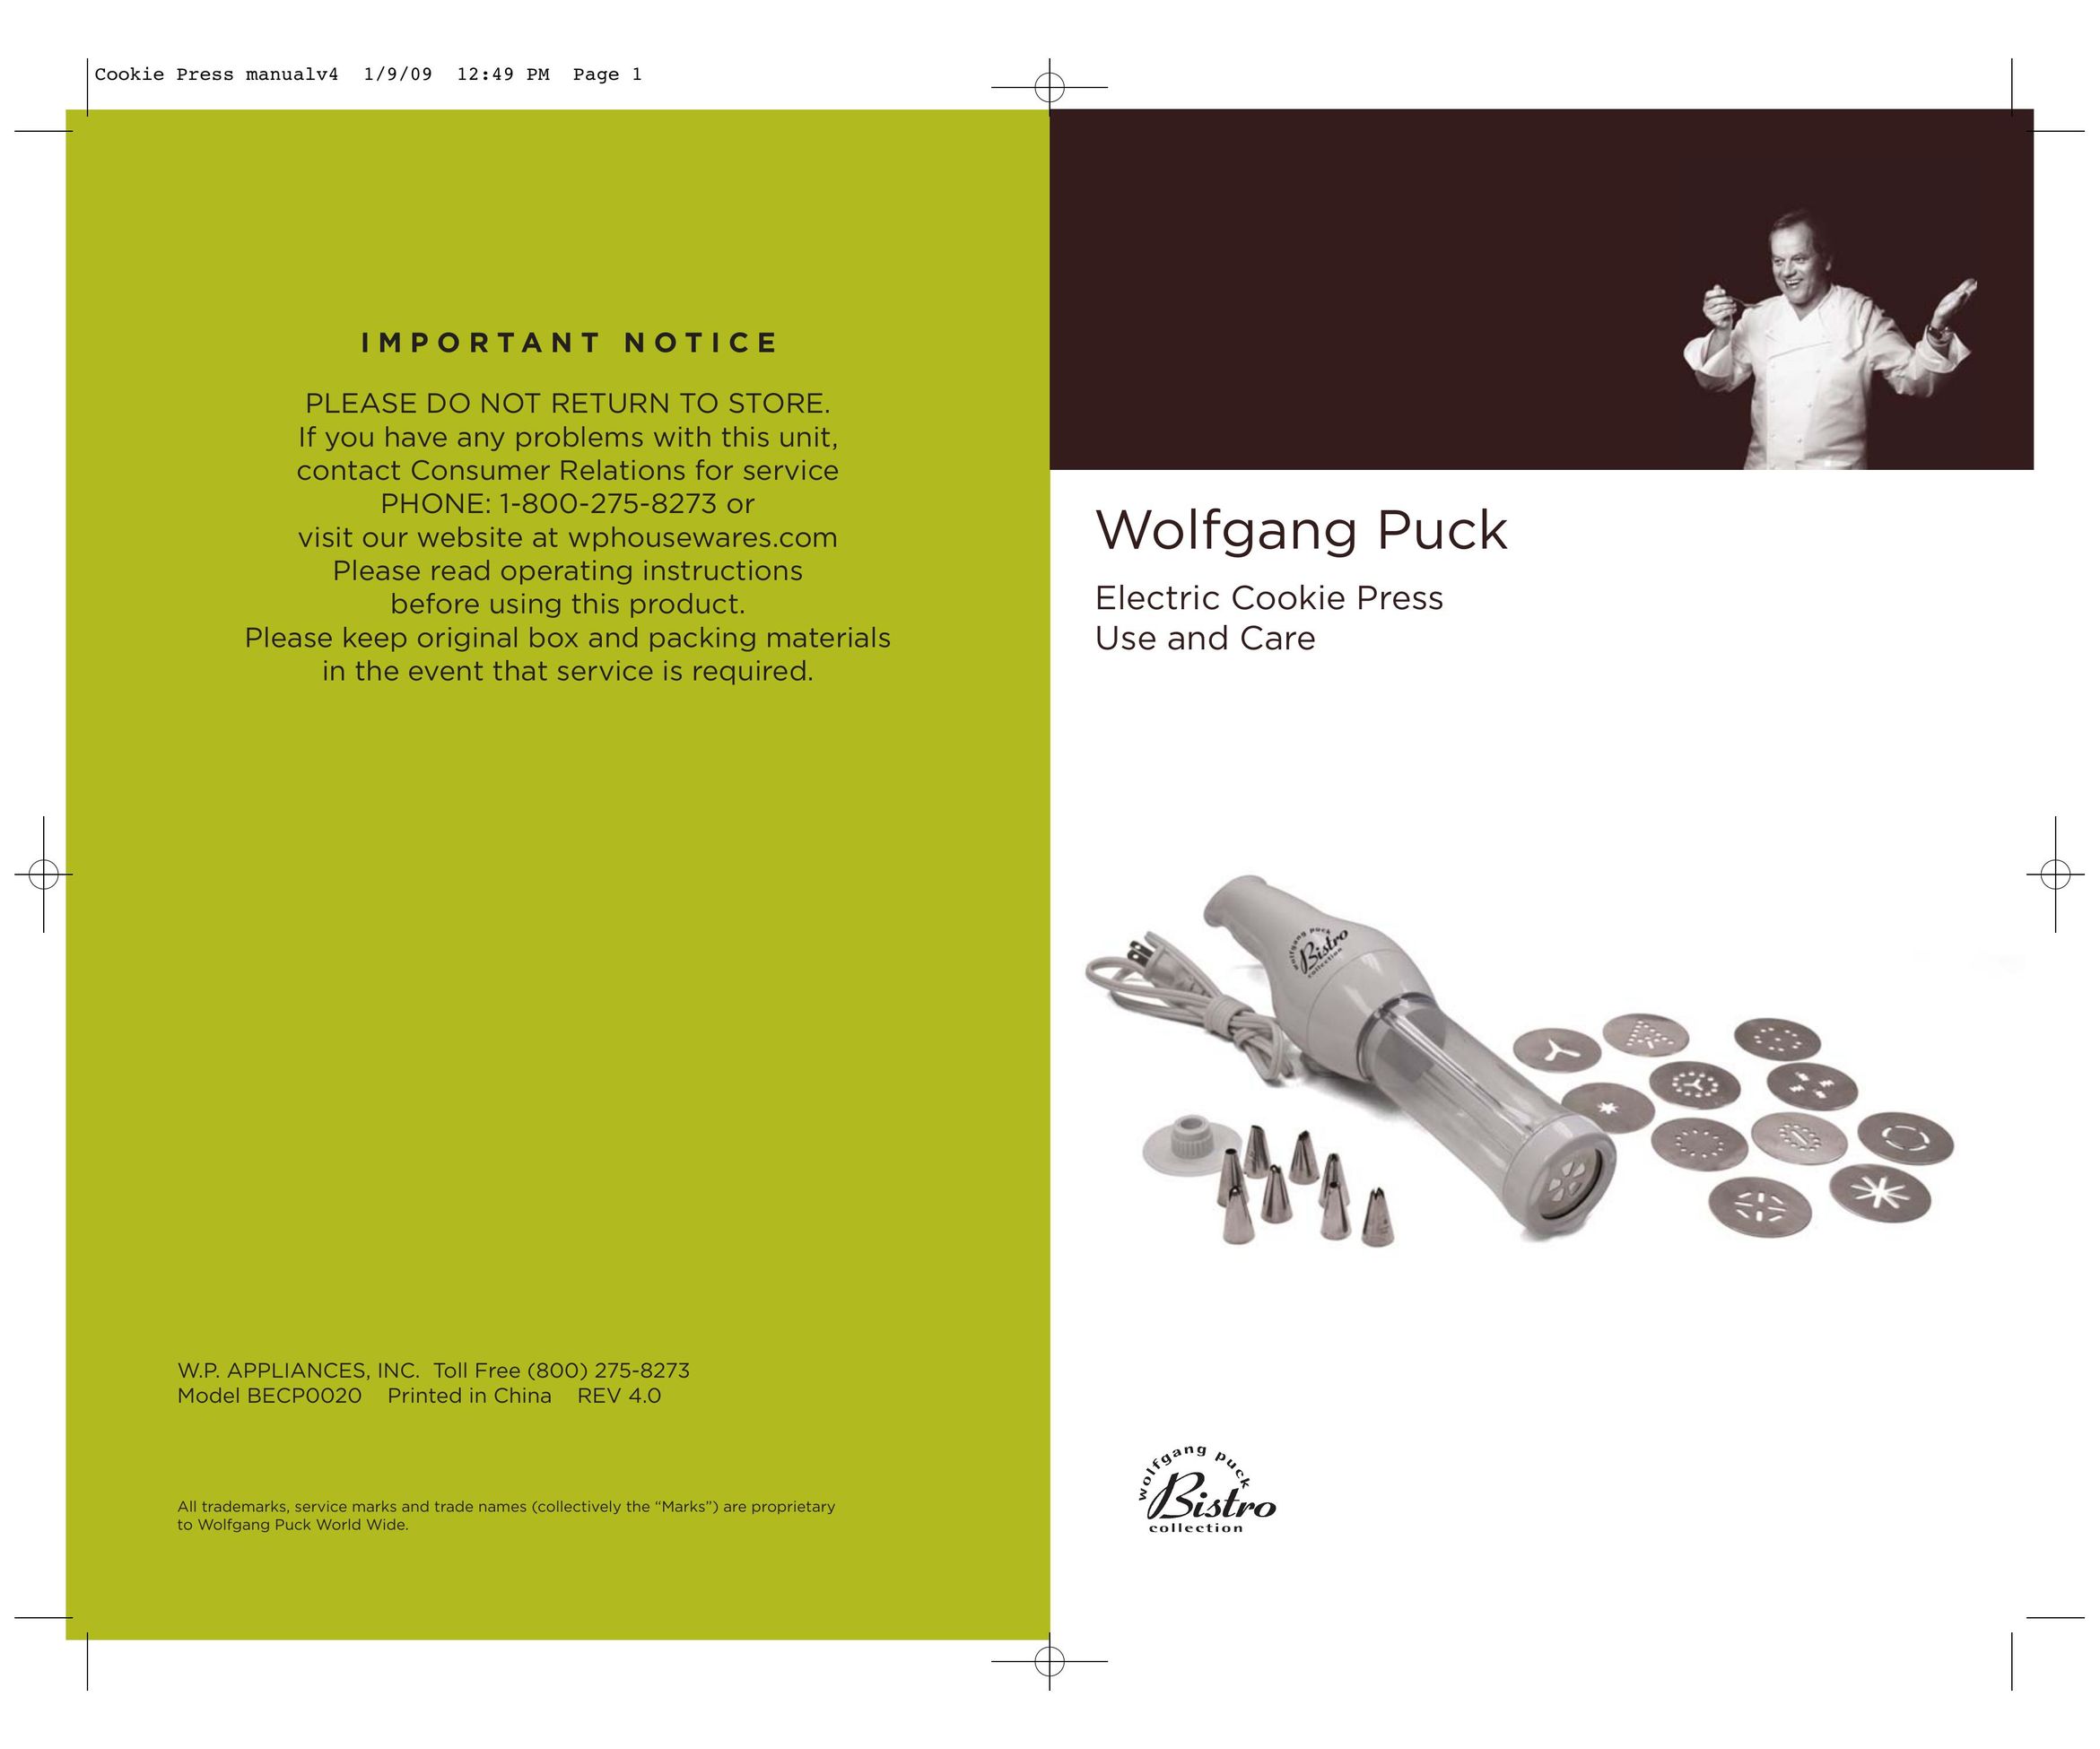 Wolfgang Puck BECP0020 Electric Cookie Press User Manual